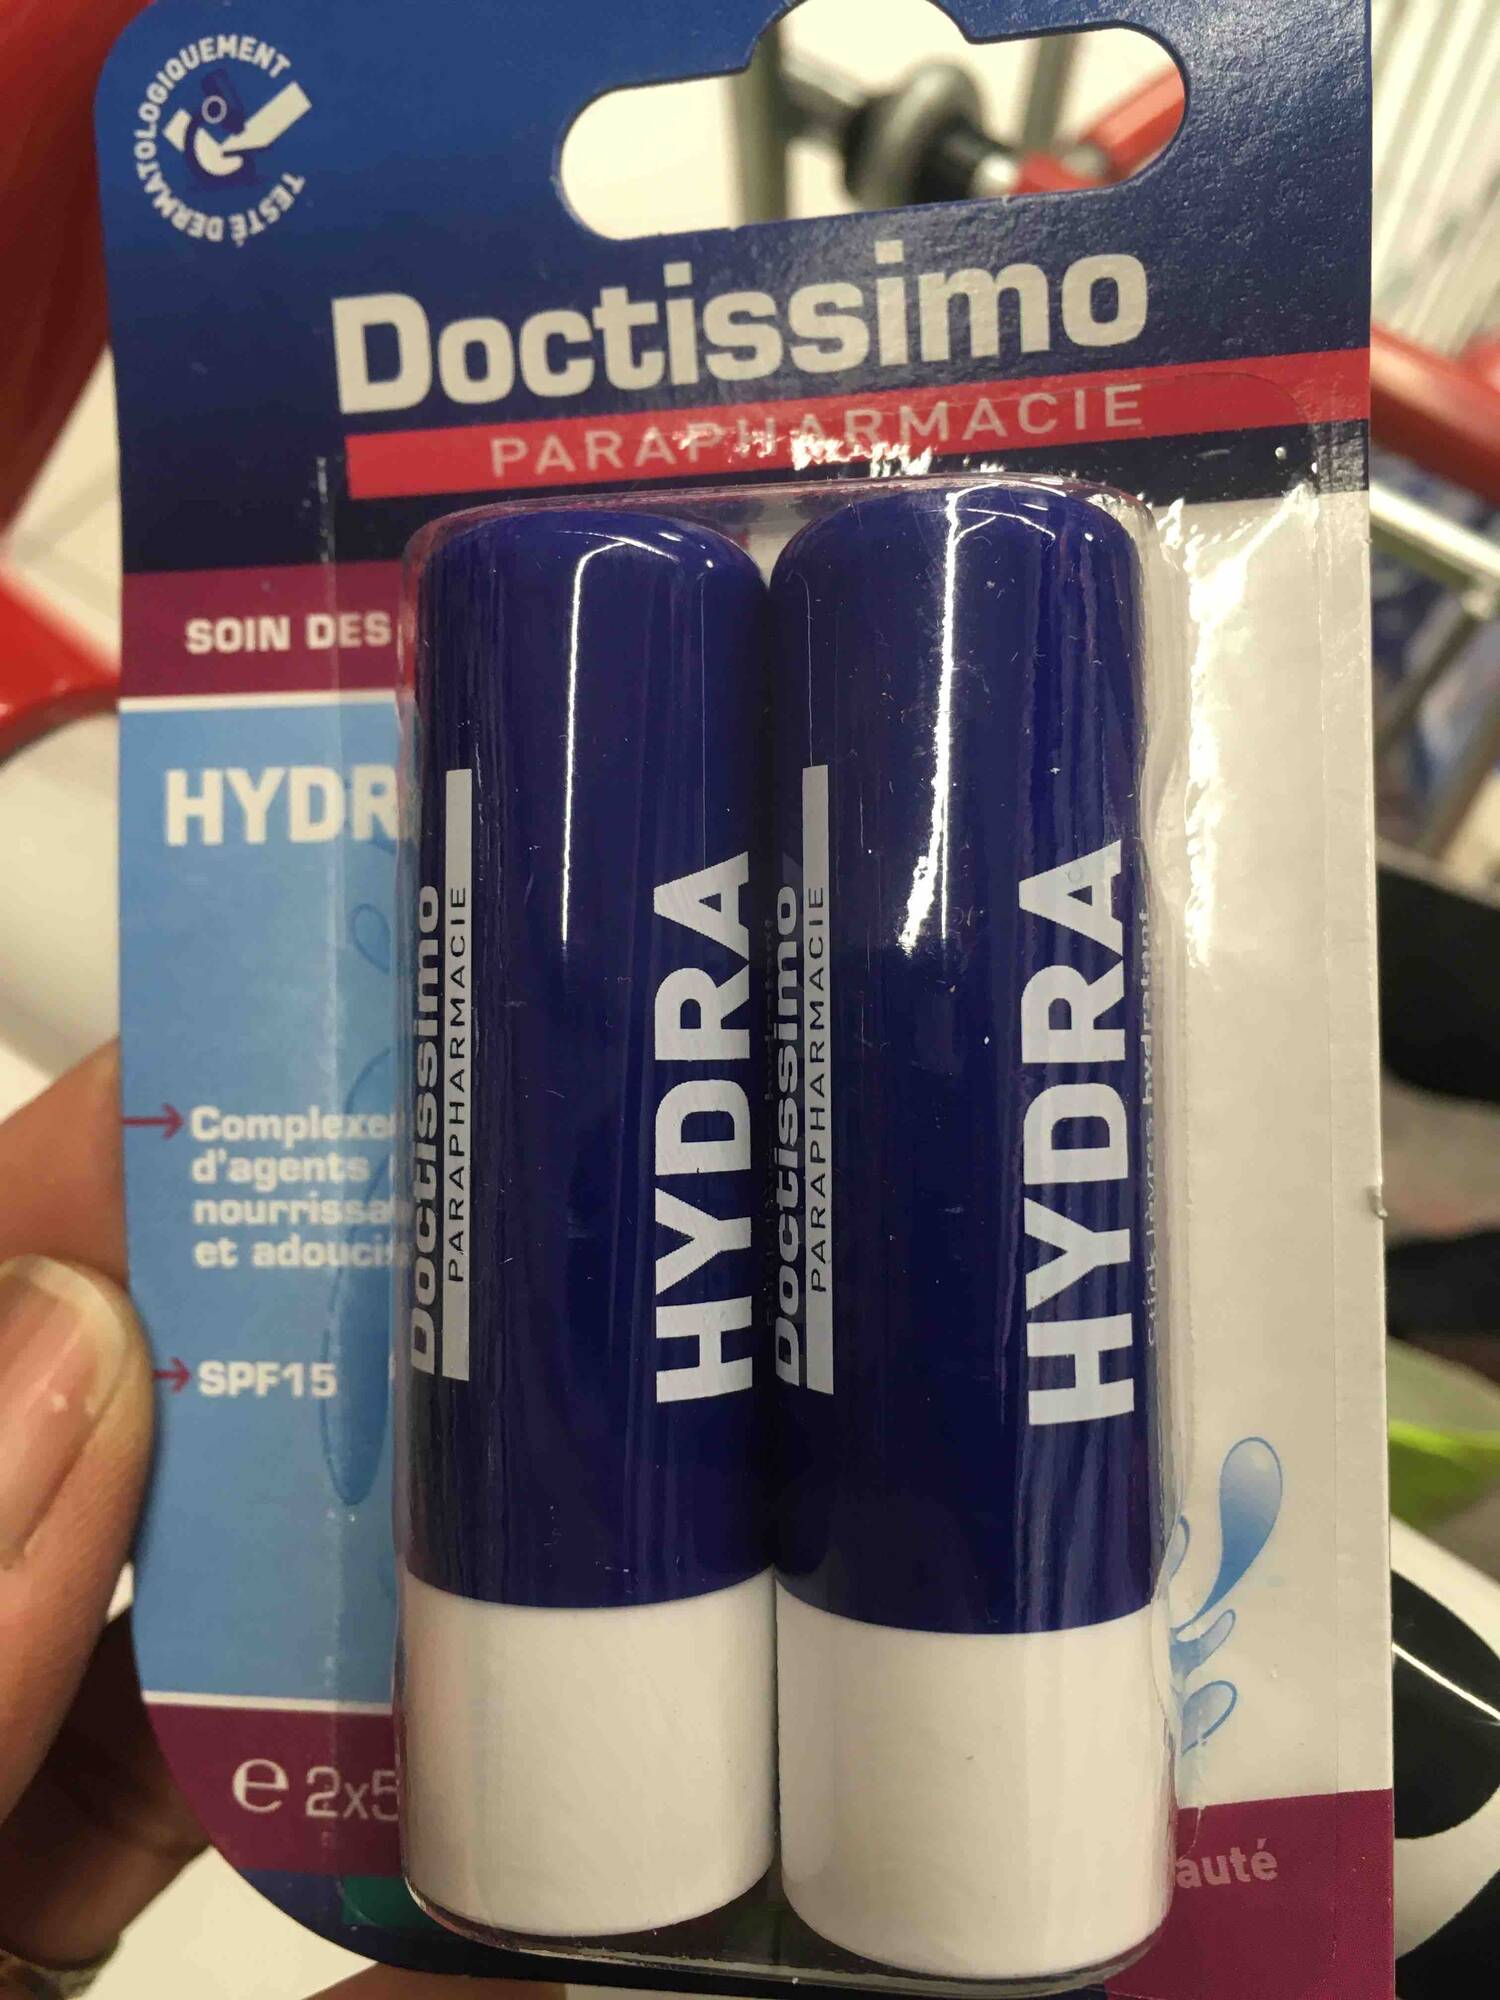 DOCTISSIMO - Hydra SPF 15 - Le soin des lèvres